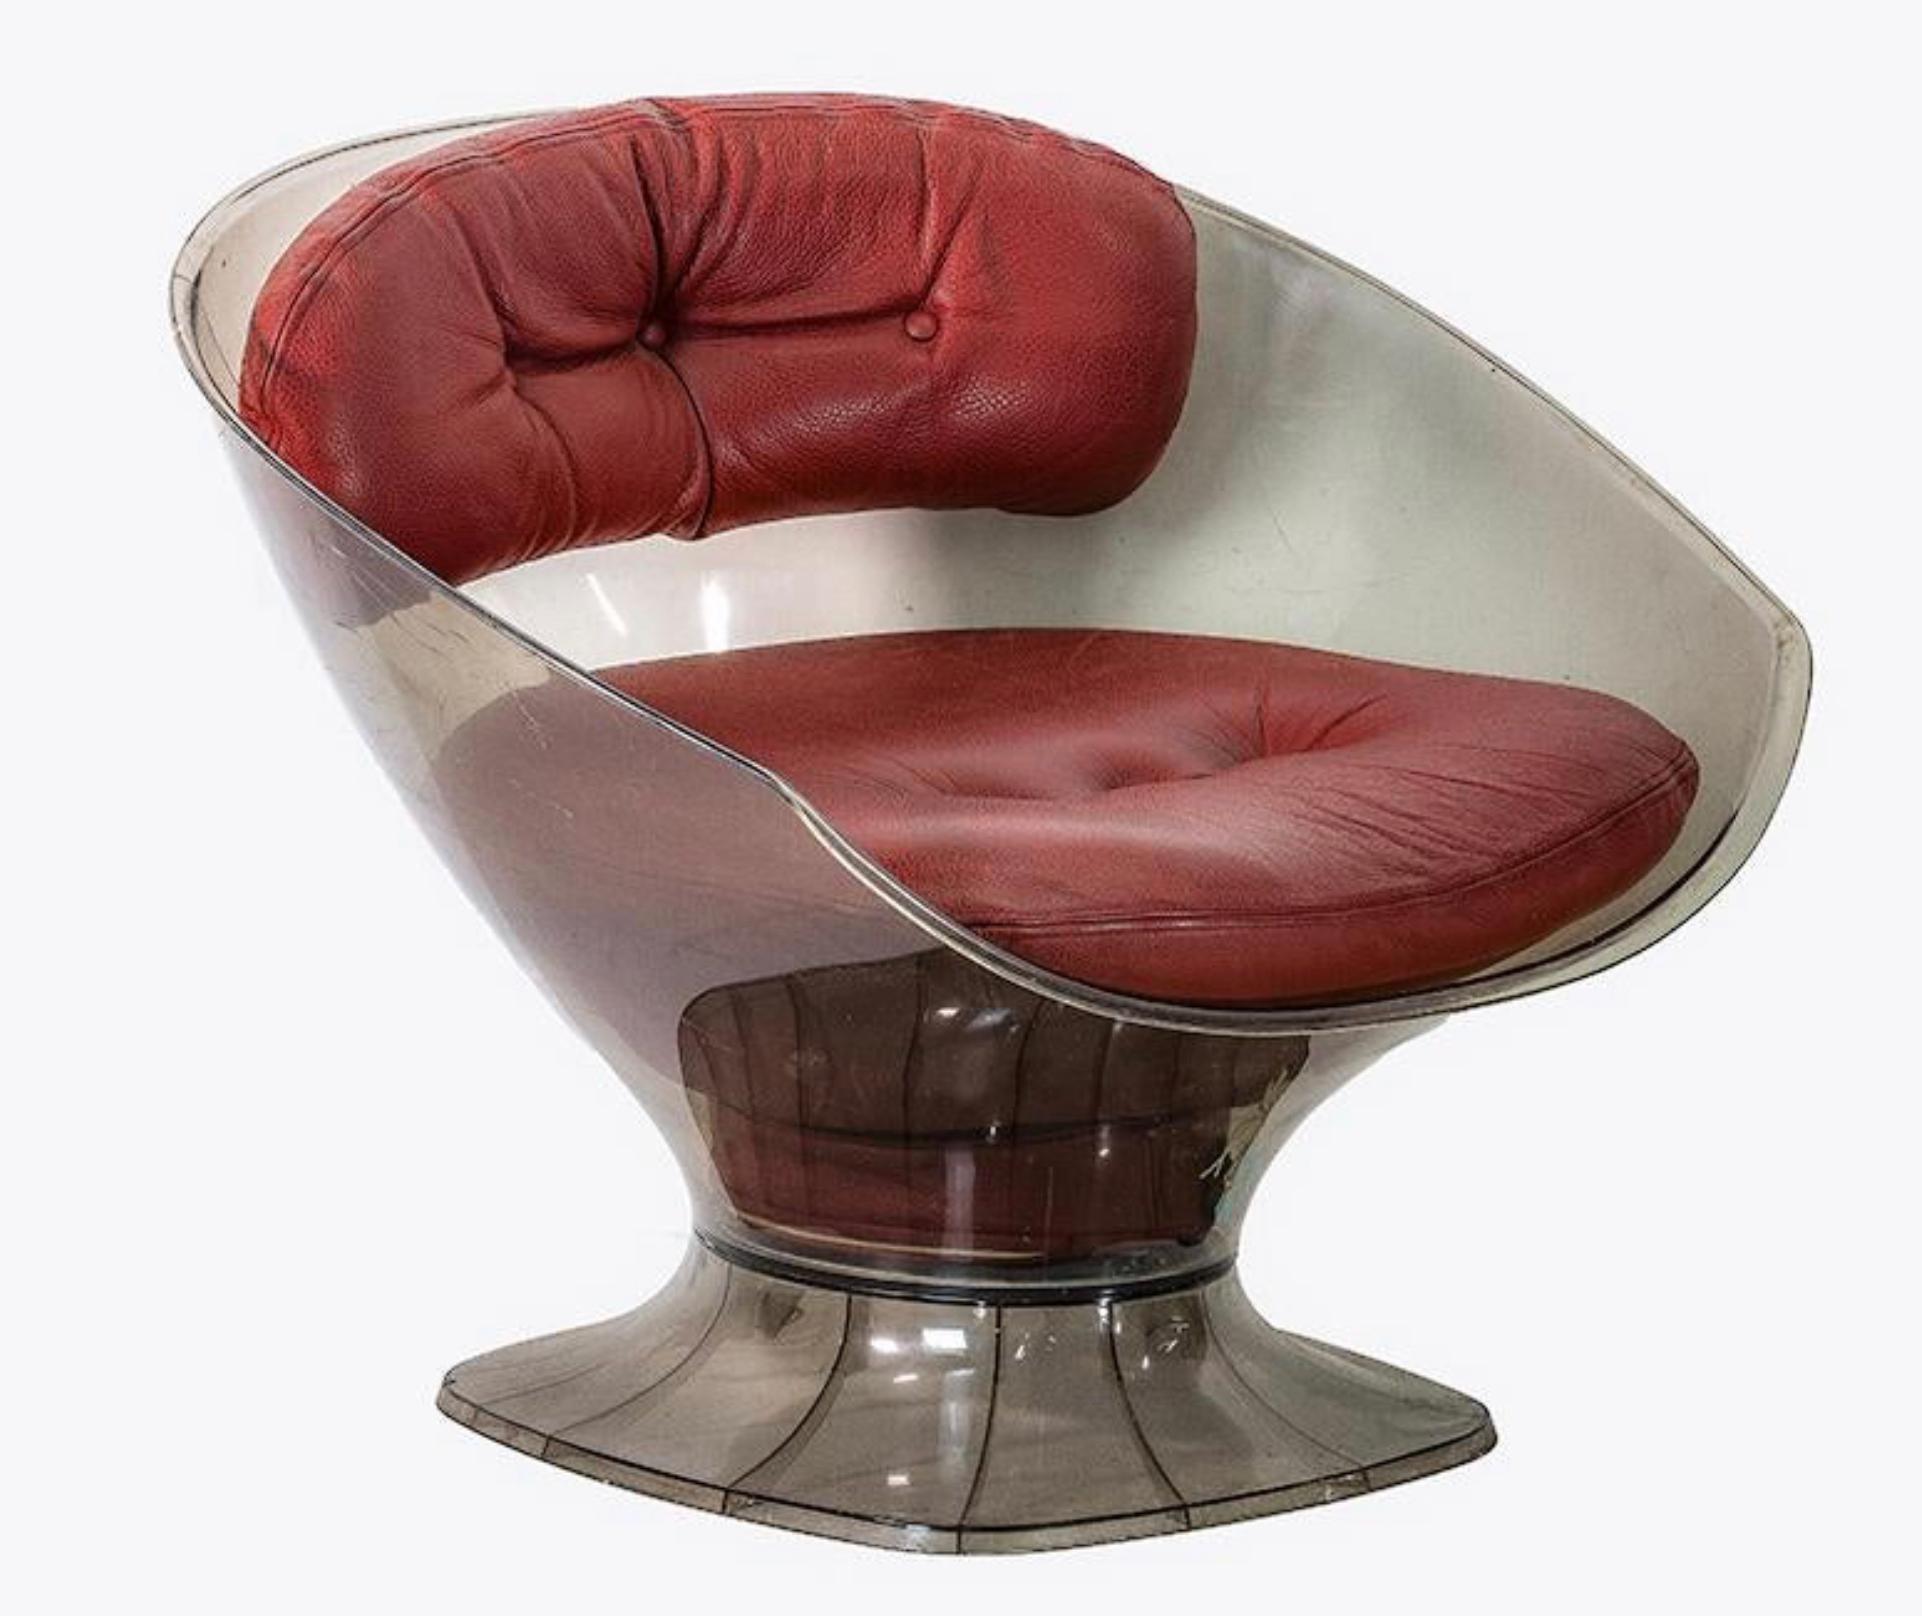 Raphael Rafael French modern Smokey Lucite club tub chair, dark red / burgundy leather / leatherette, 1960s.